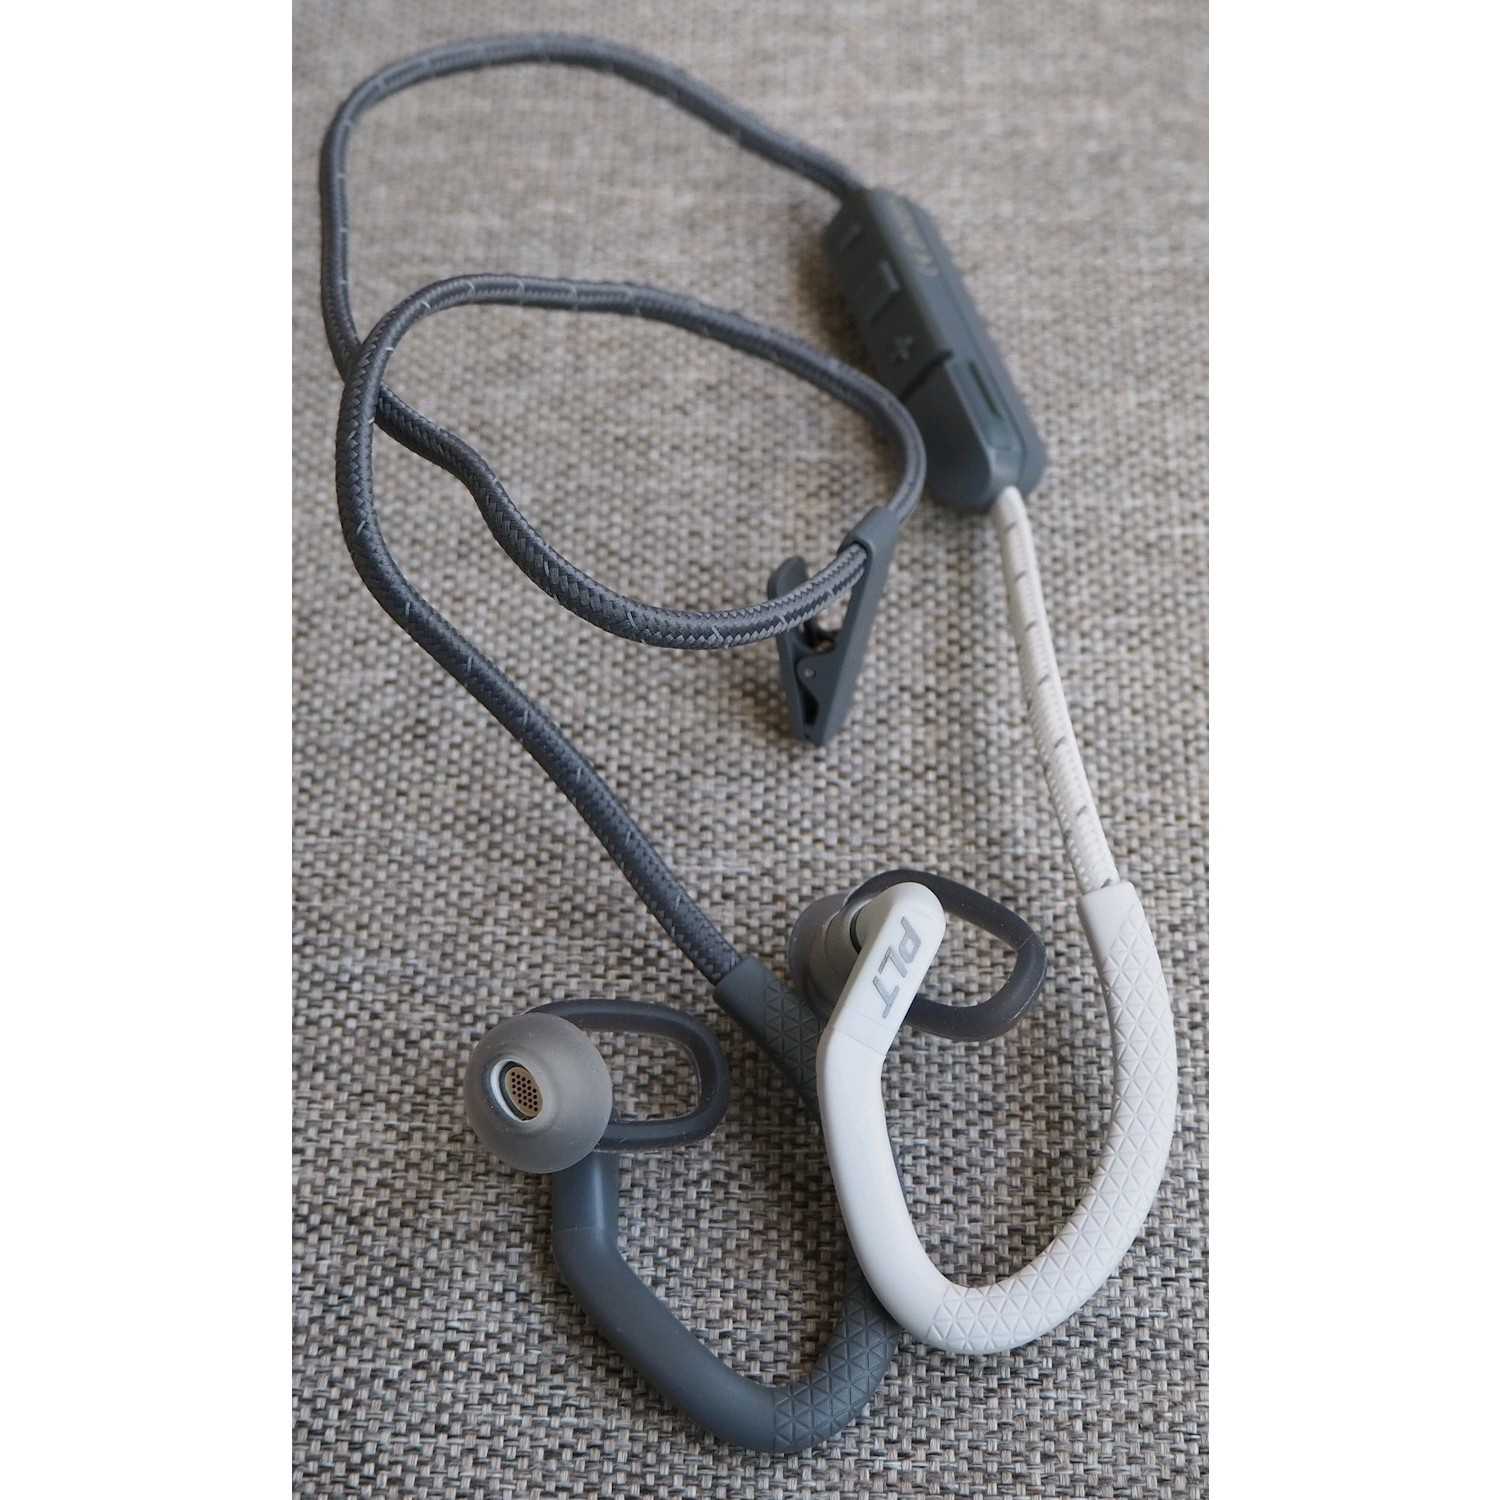 Bluetooth стереогарнитура plantronics backbeat 903+ black — купить, цена и характеристики, отзывы